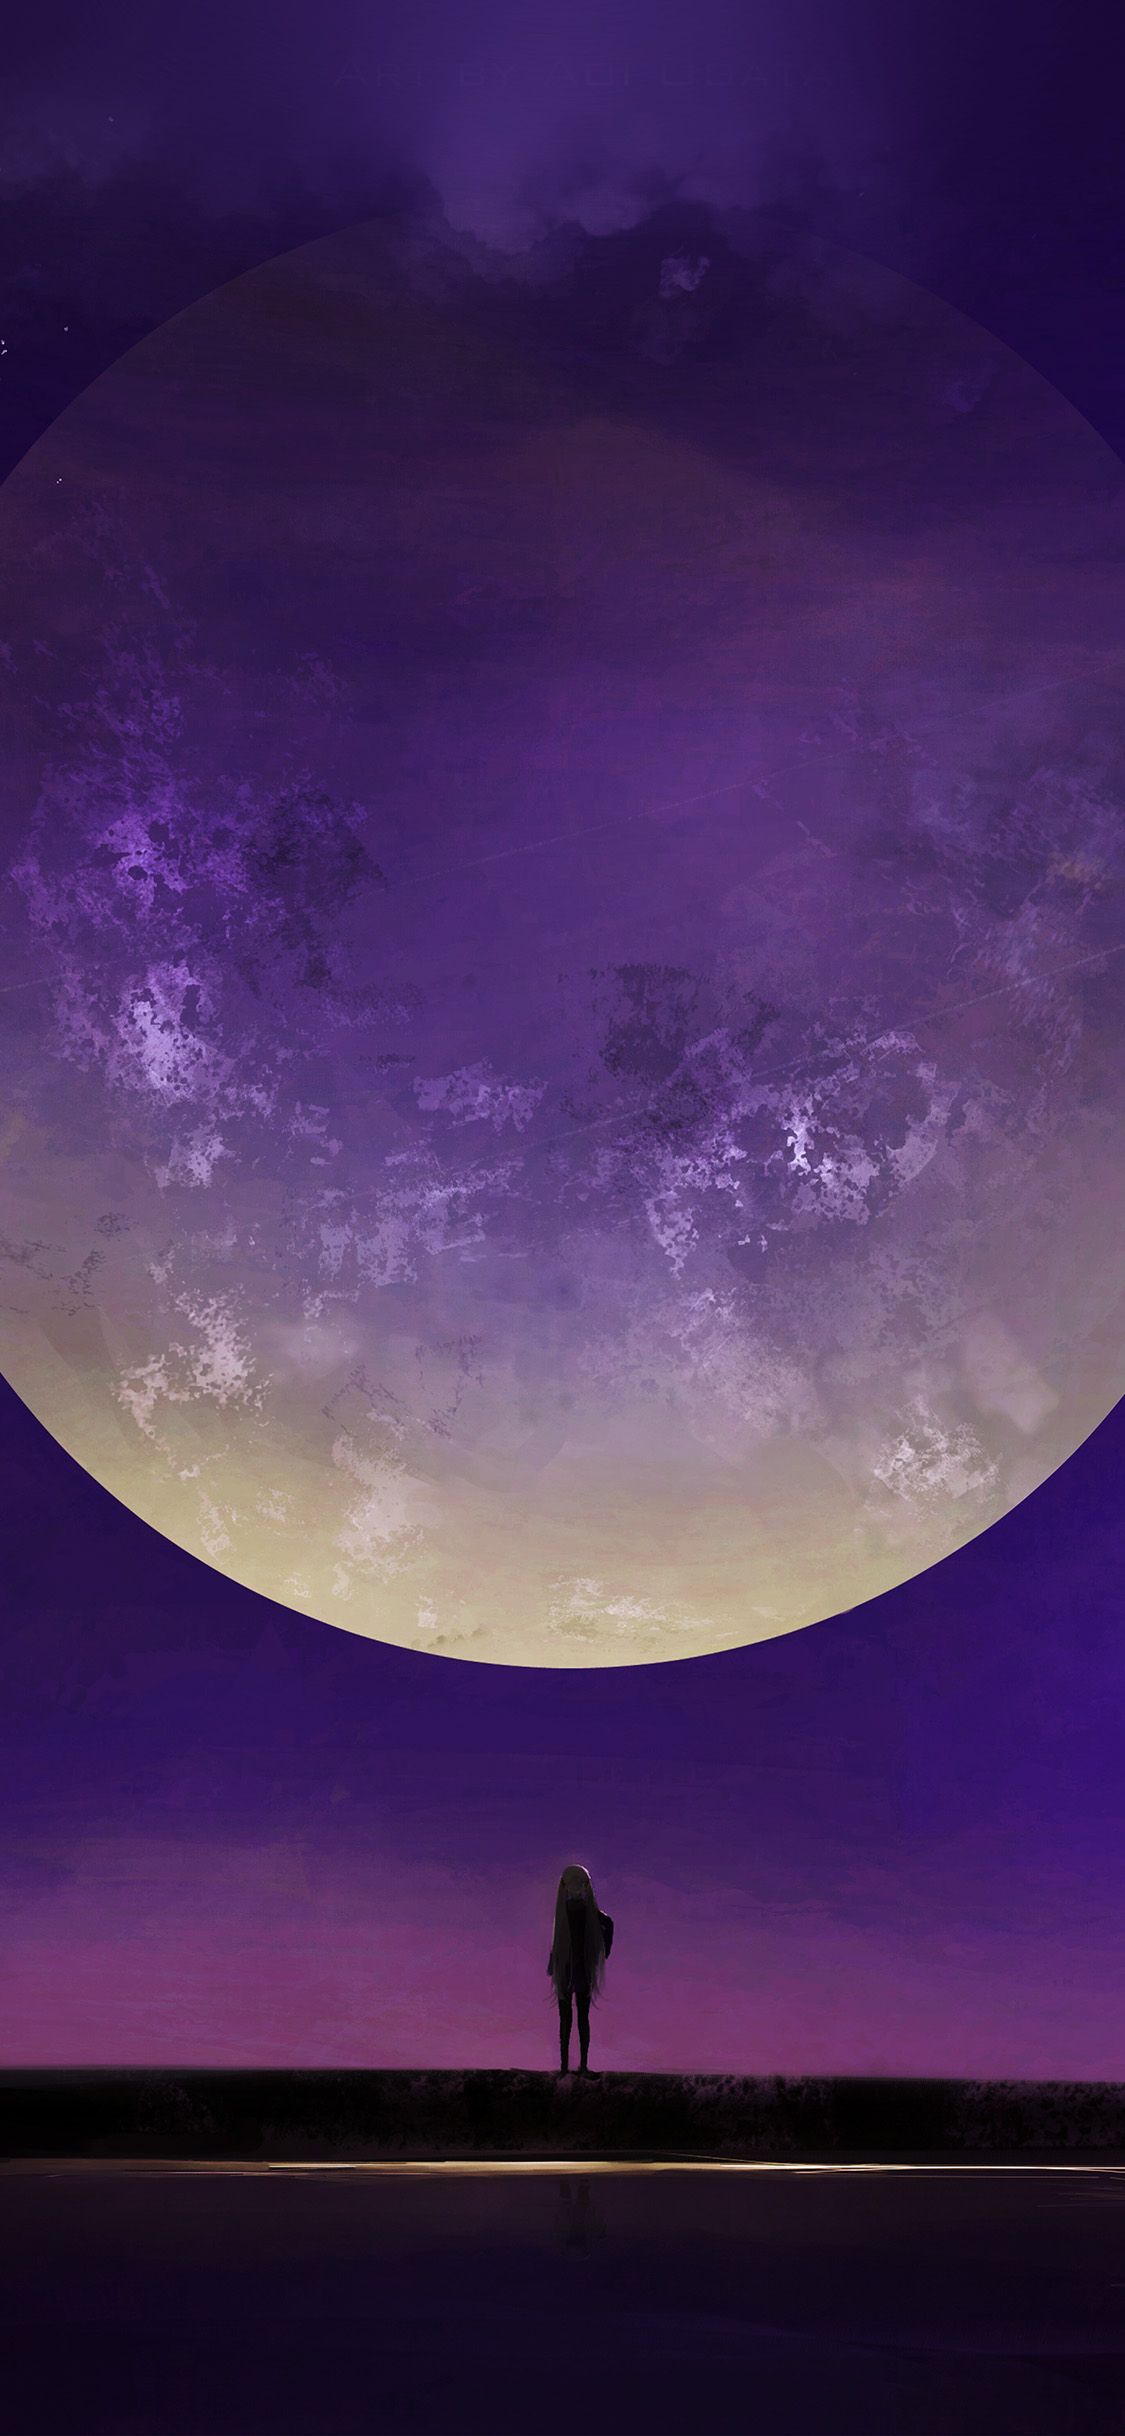 iPhone X wallpaper. moon anime night art illustration purple